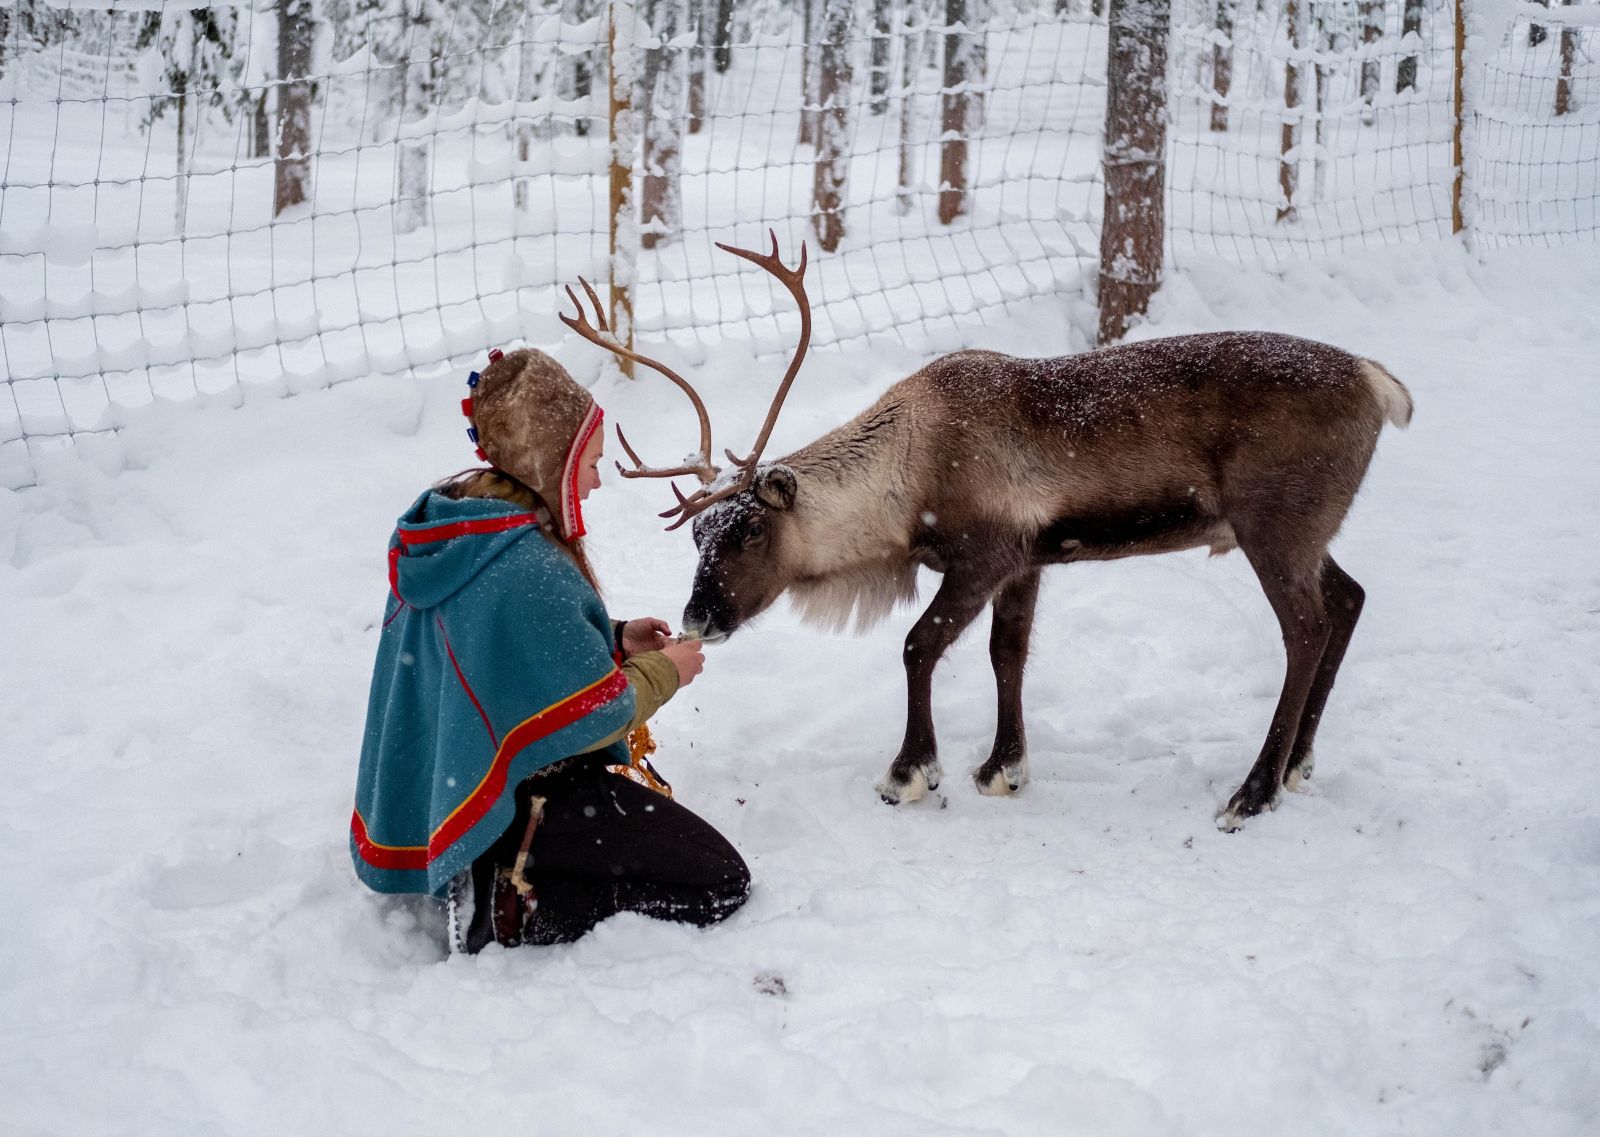 Sami reindeer in Lapland, Finland